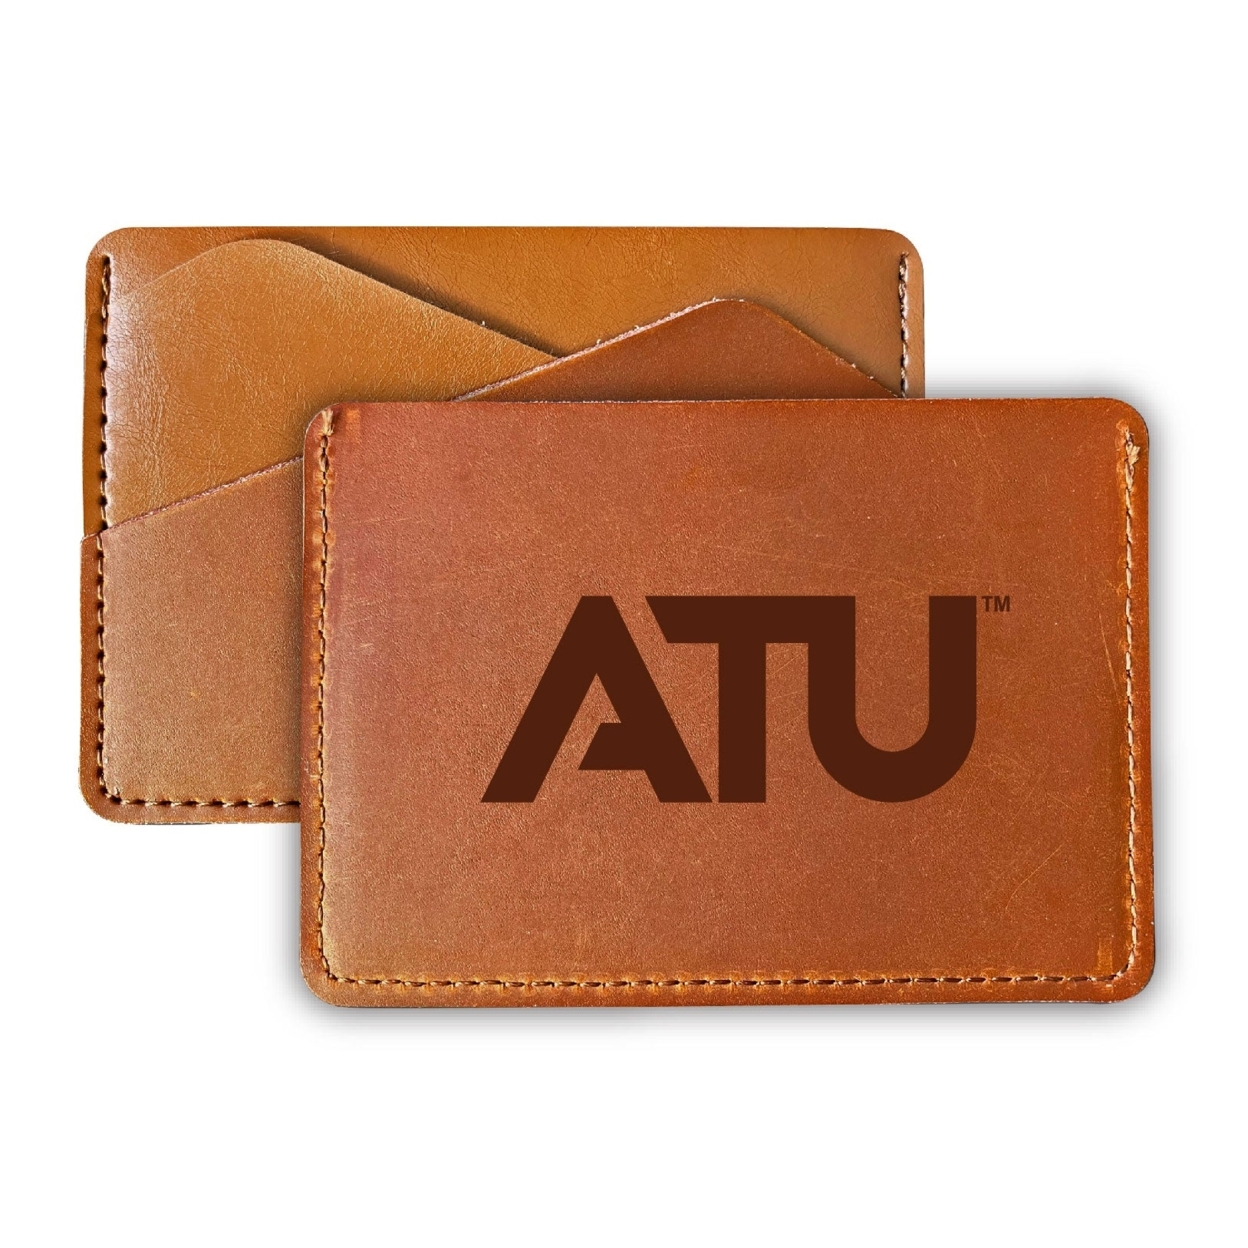 Arkansas Tech University College Leather Card Holder Wallet